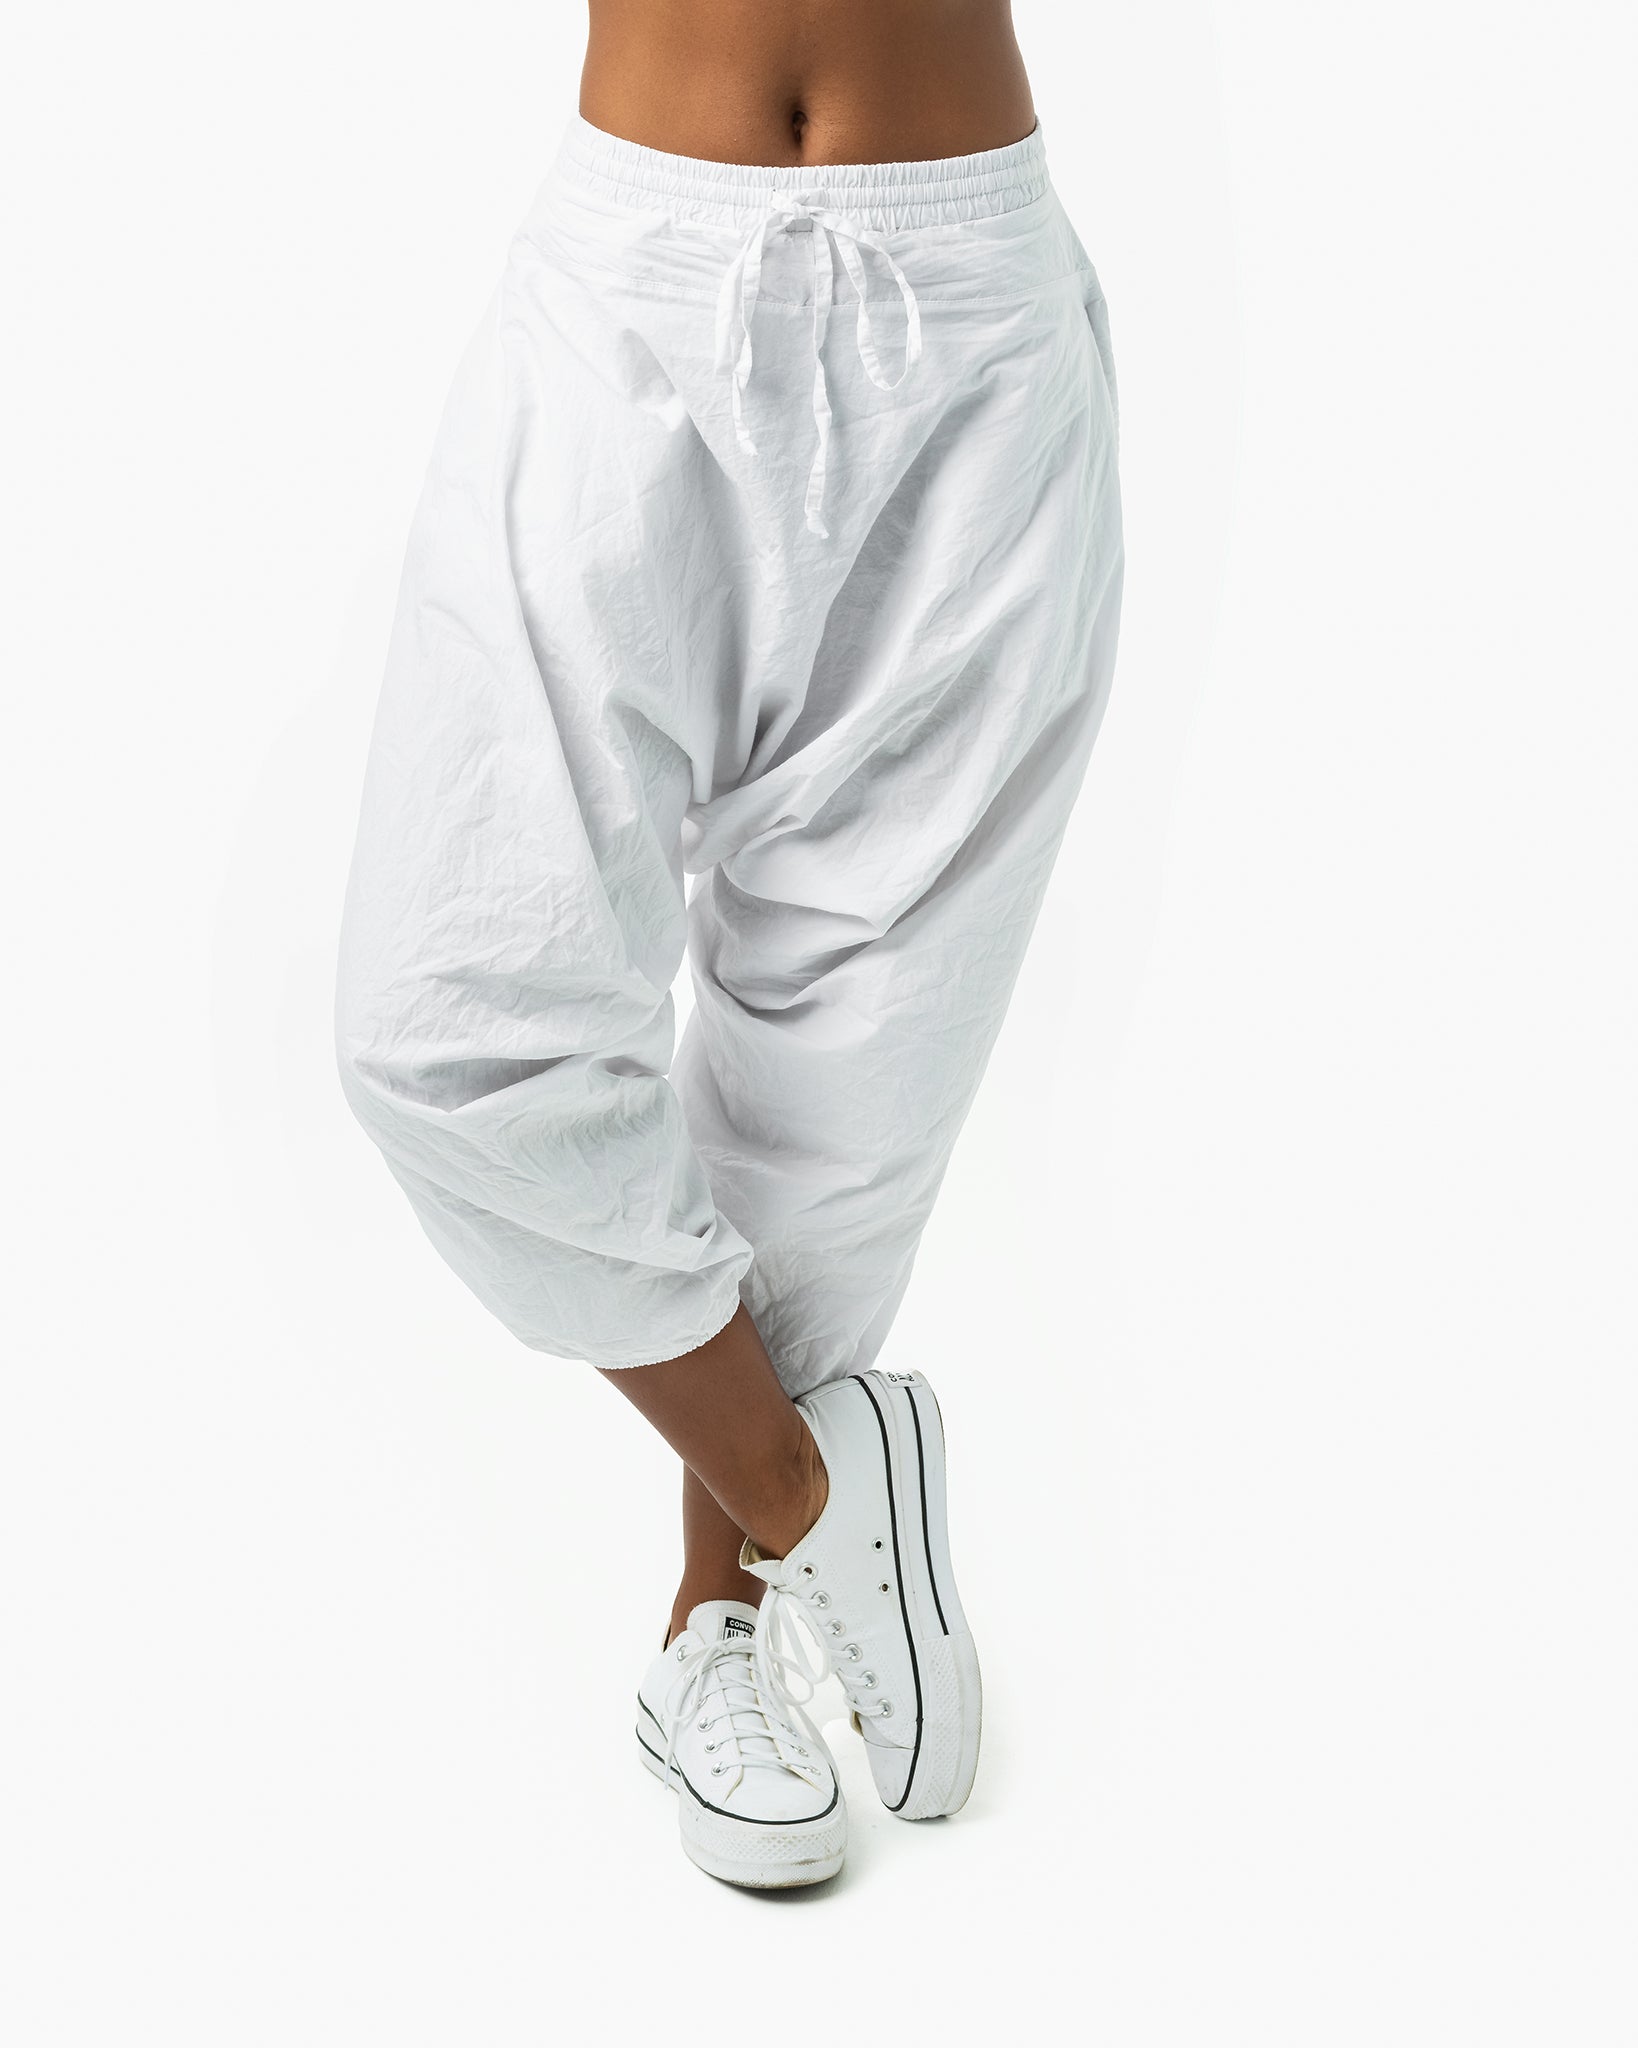 Siamrose Harem Pants for Men and Women, Baggy Pants, Aladdin Pants, Yoga  Pants, One Size